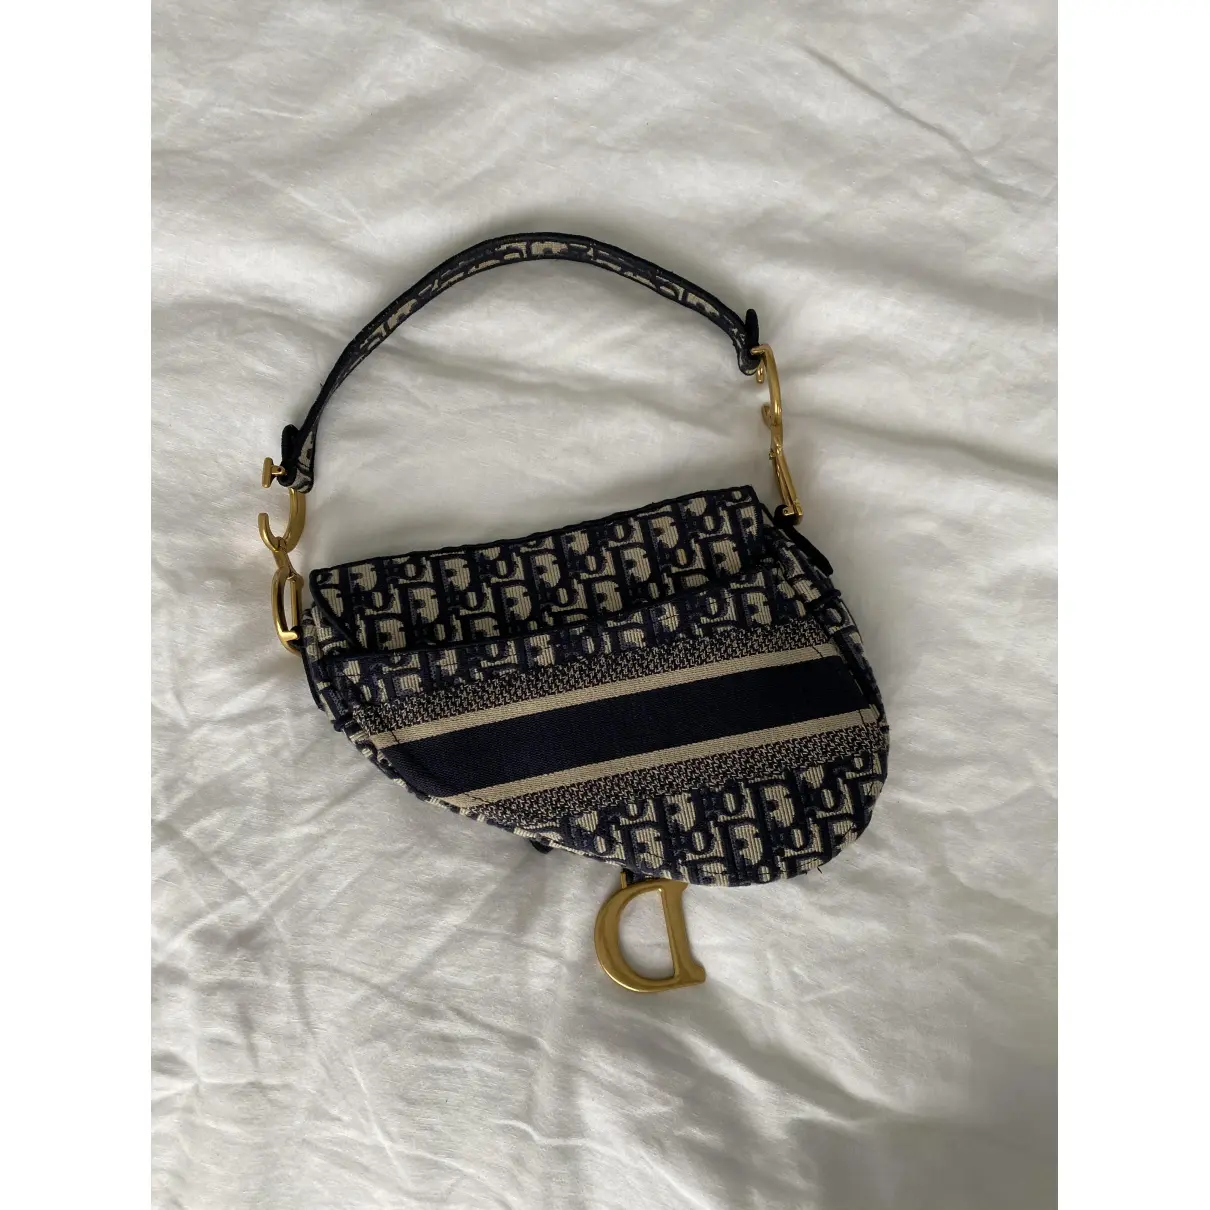 Buy Dior Saddle cloth handbag online